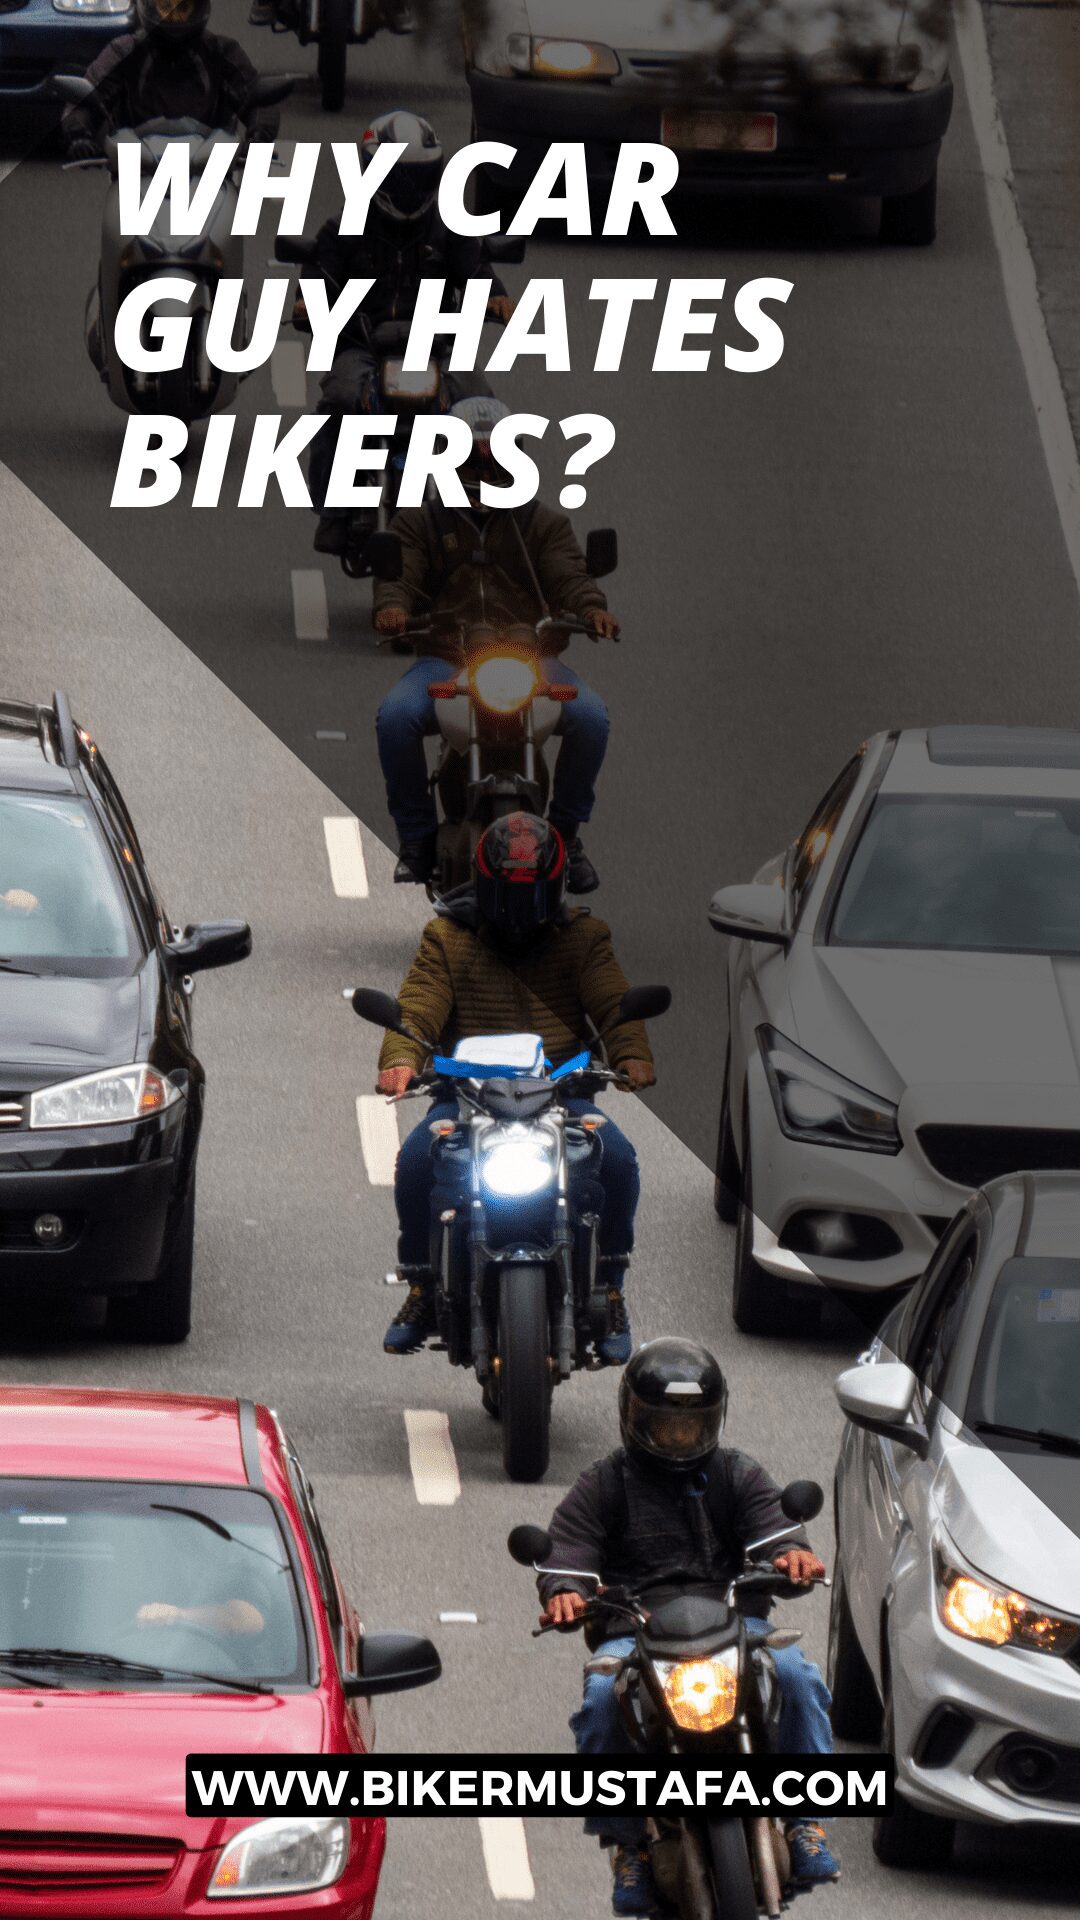 Why Car Guy Hates Bikers?